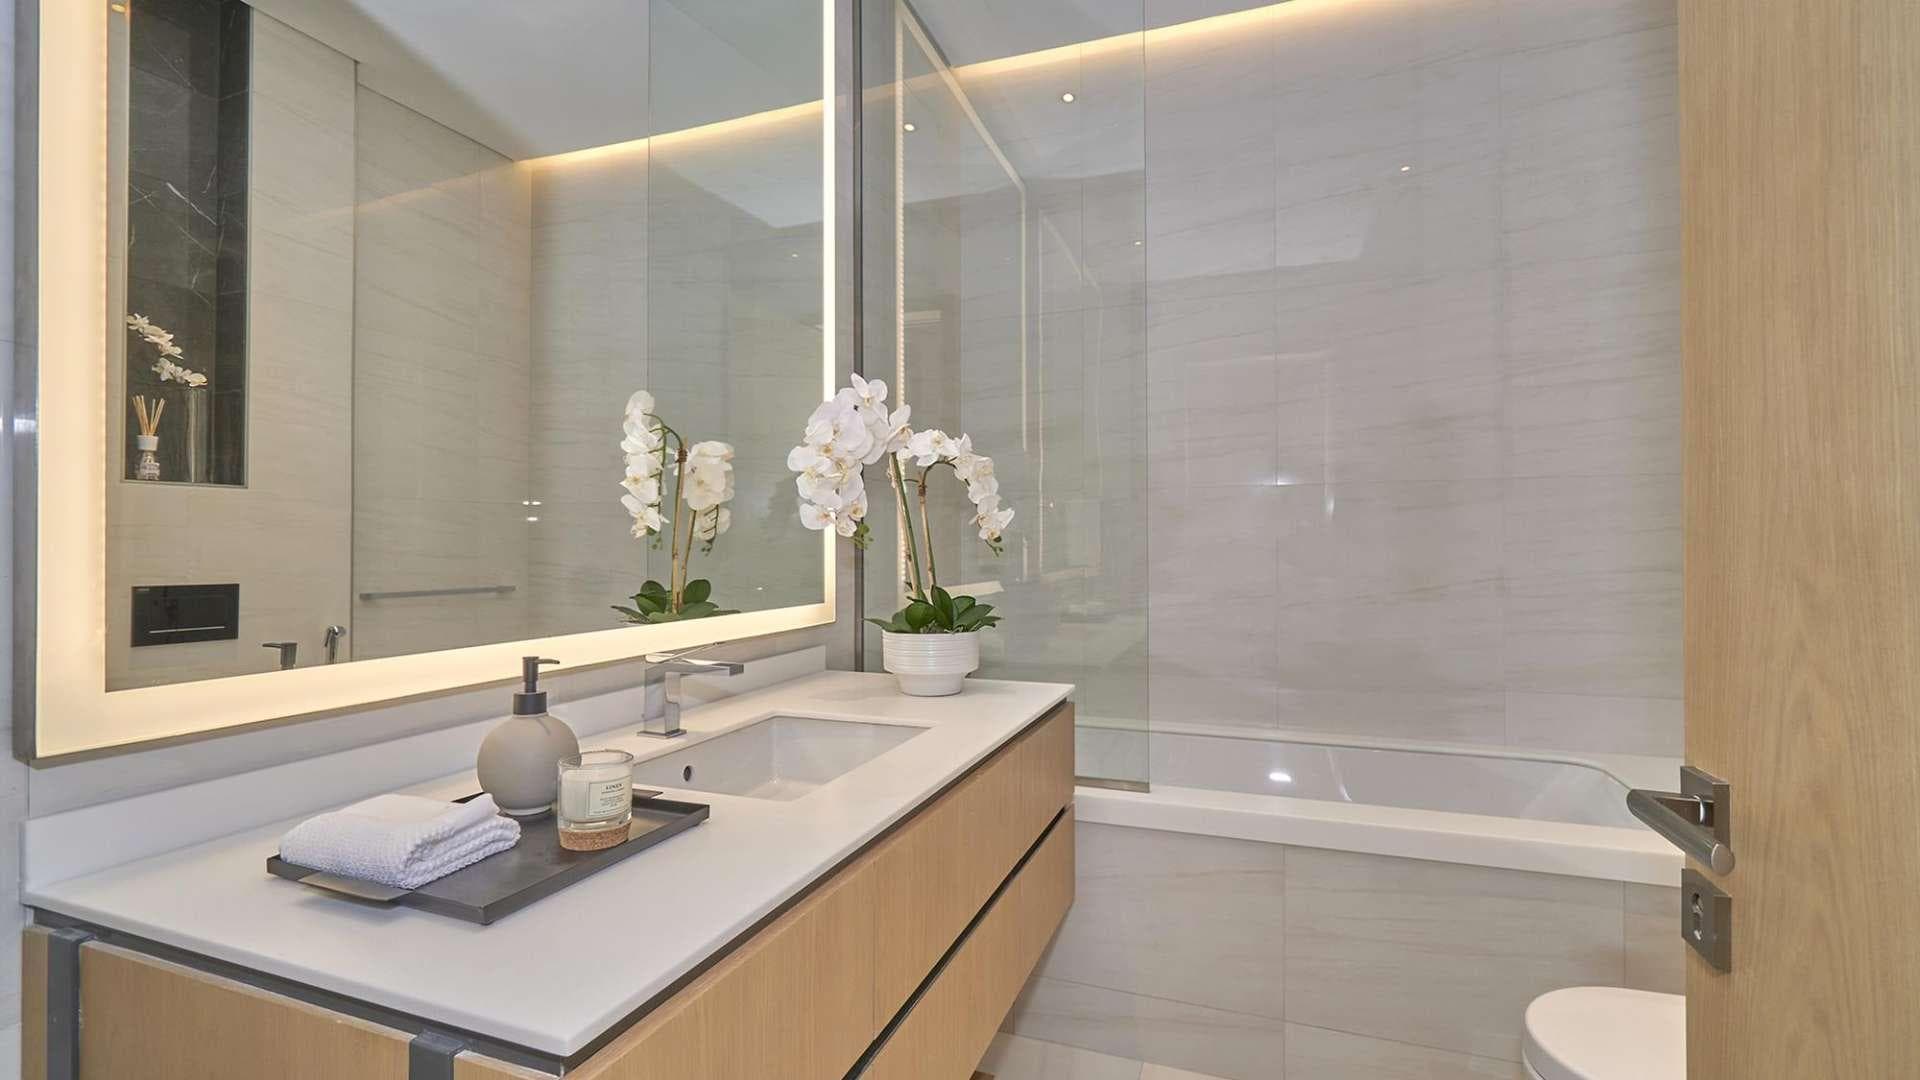 2 Bedroom Apartment For Rent Sls Dubai Hotel Residences Lp20720 1c3d4ae1bd24cd00.jpg